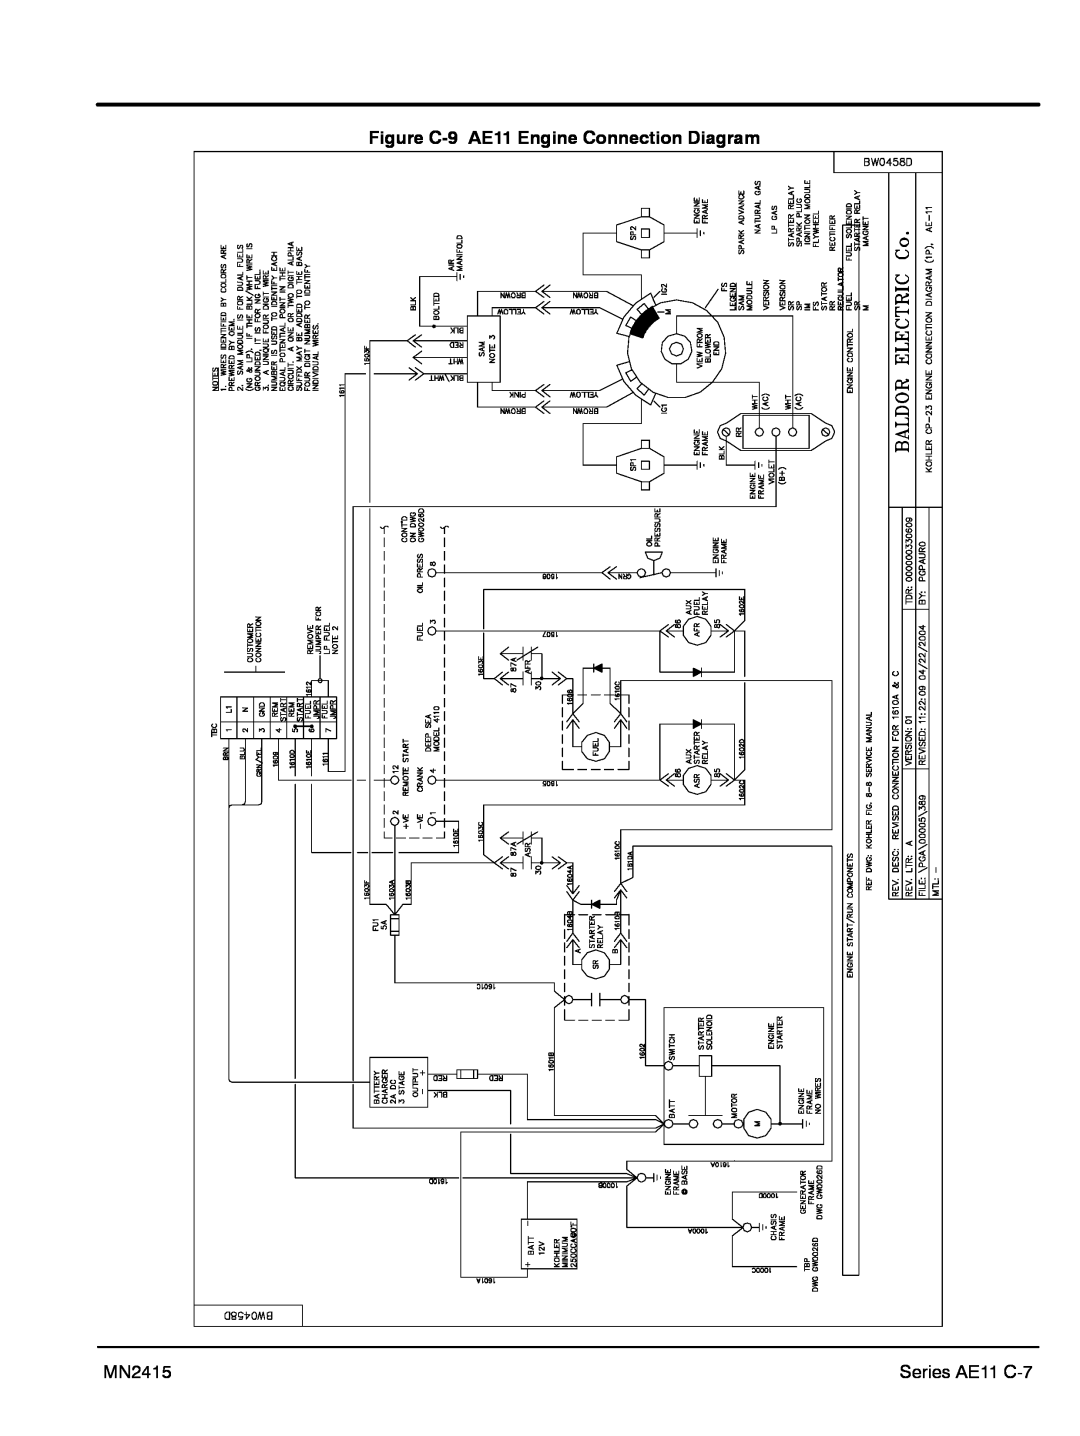 Baldor AE8, AE10, AE25 manual Figure C-9 AE11 Engine Connection Diagram, MN2415, Series AE11 C-7 